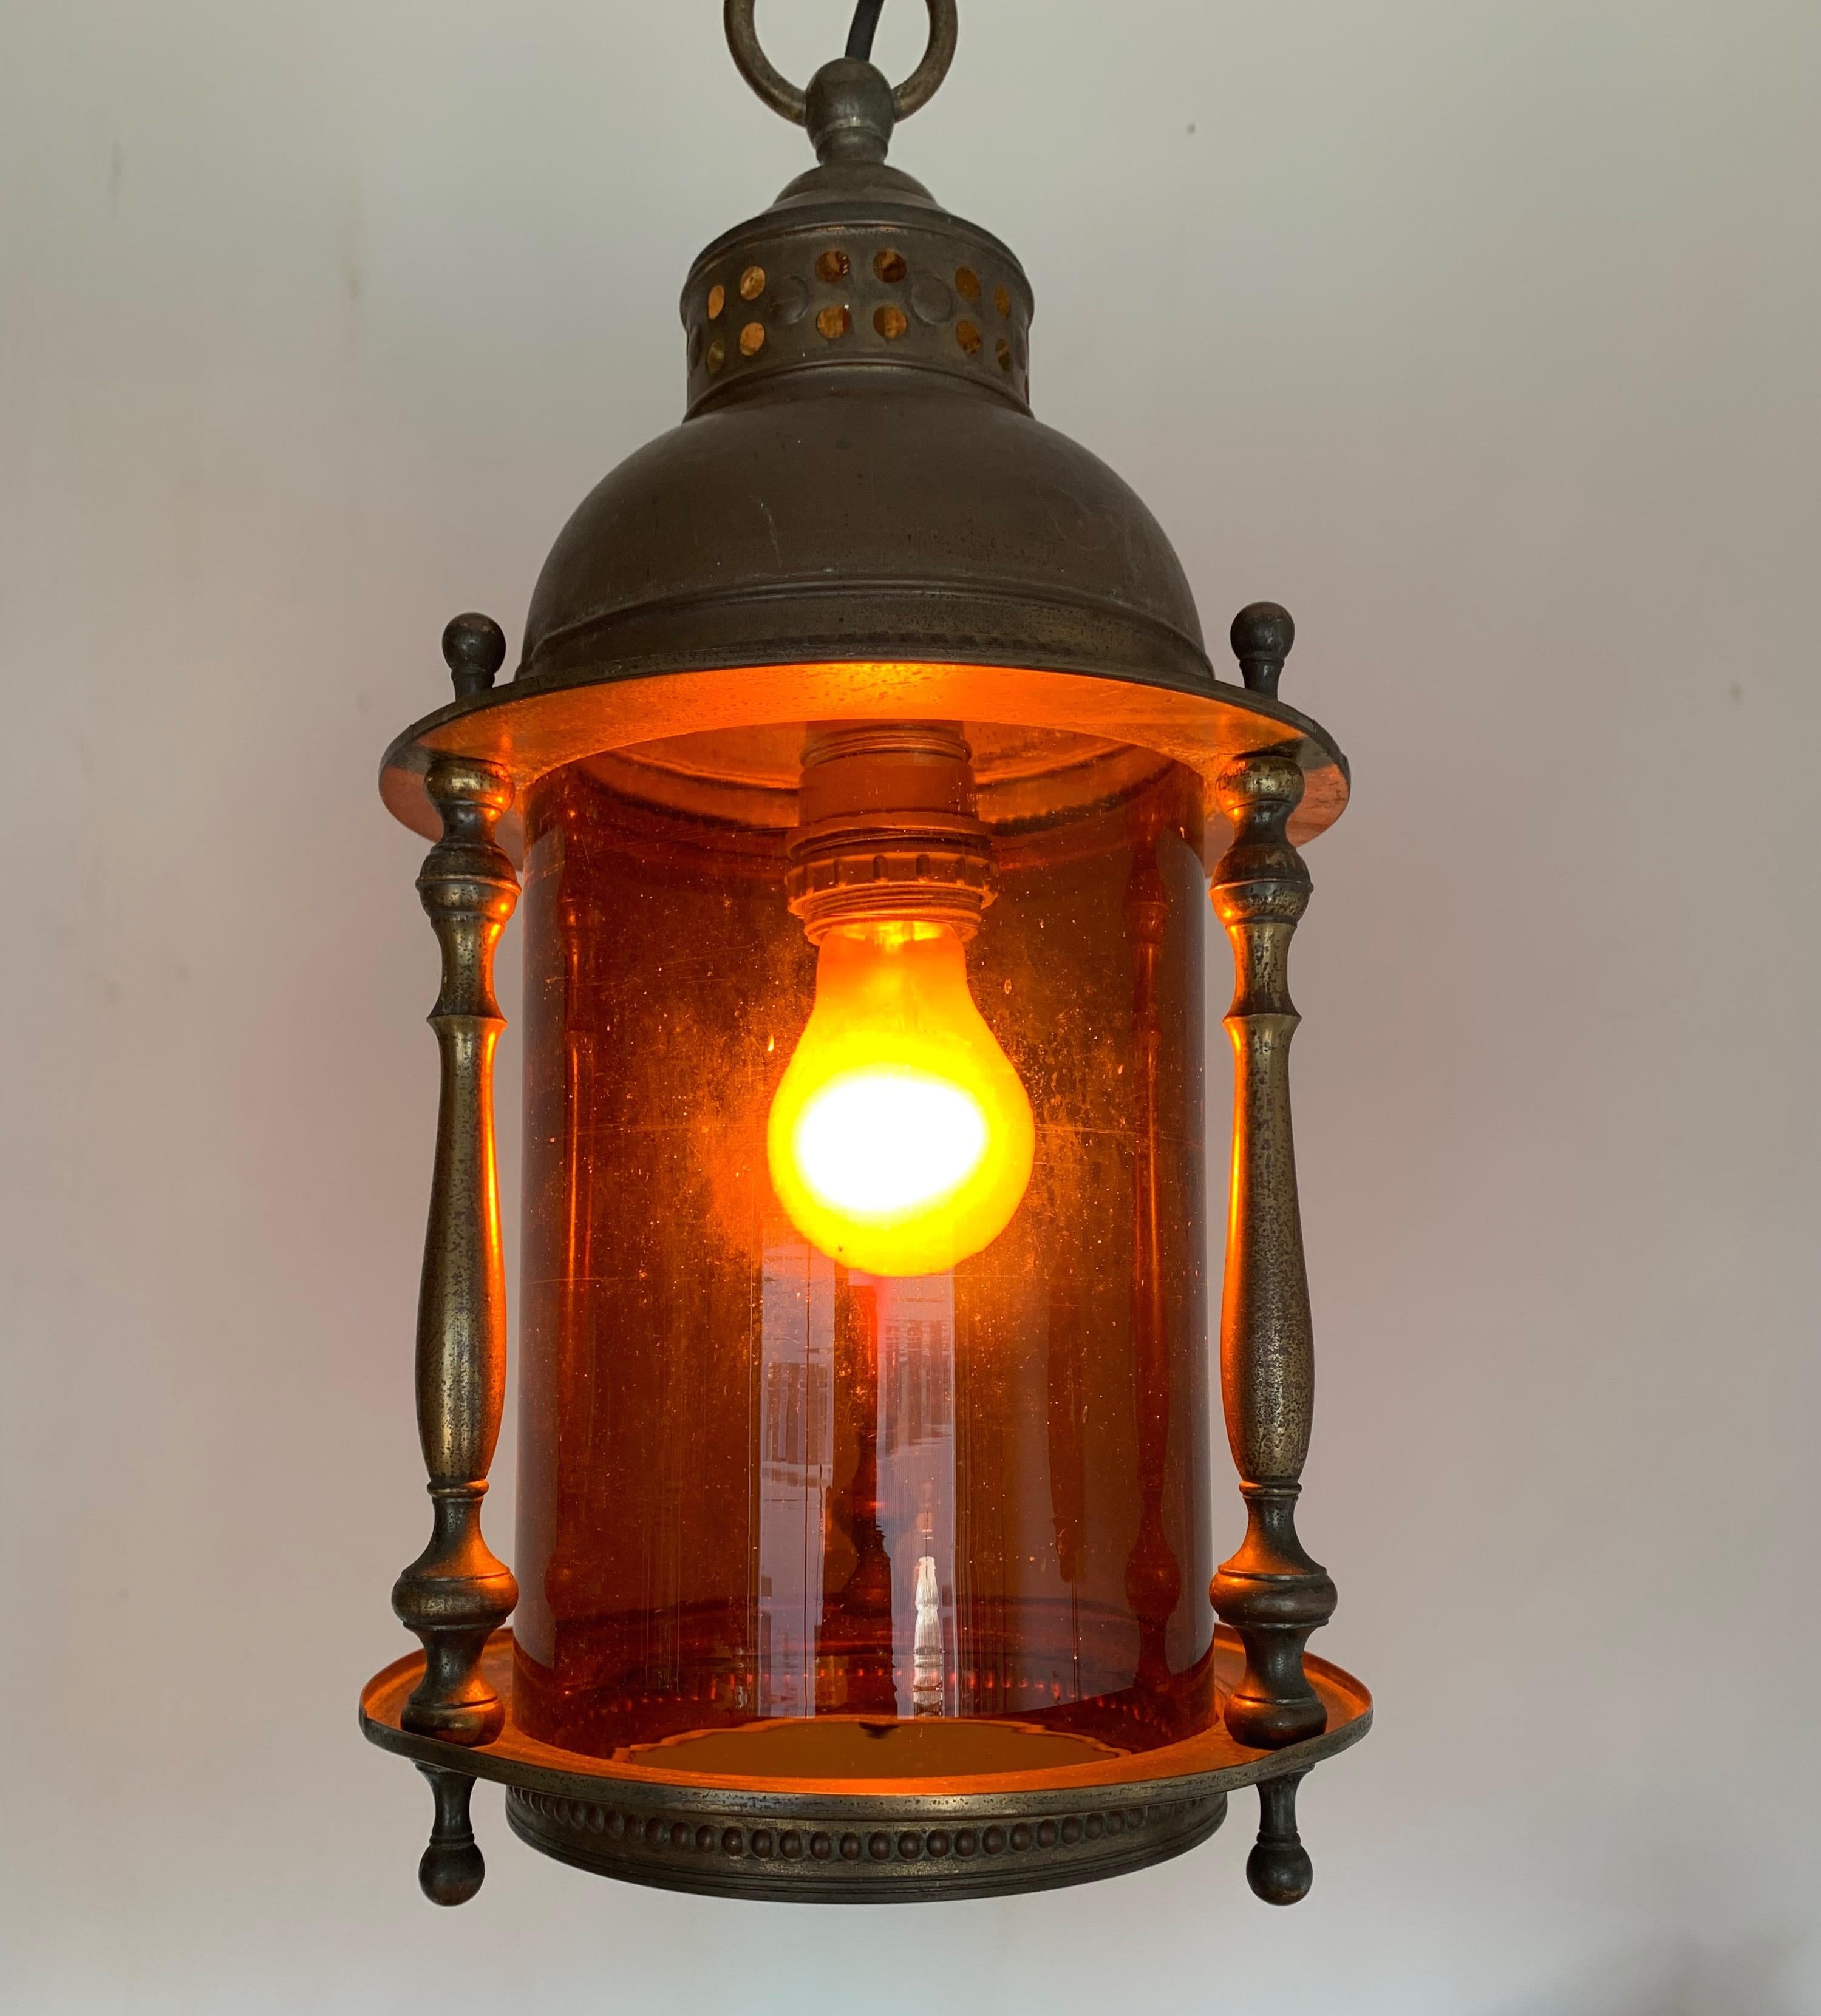 glass lantern pendant light